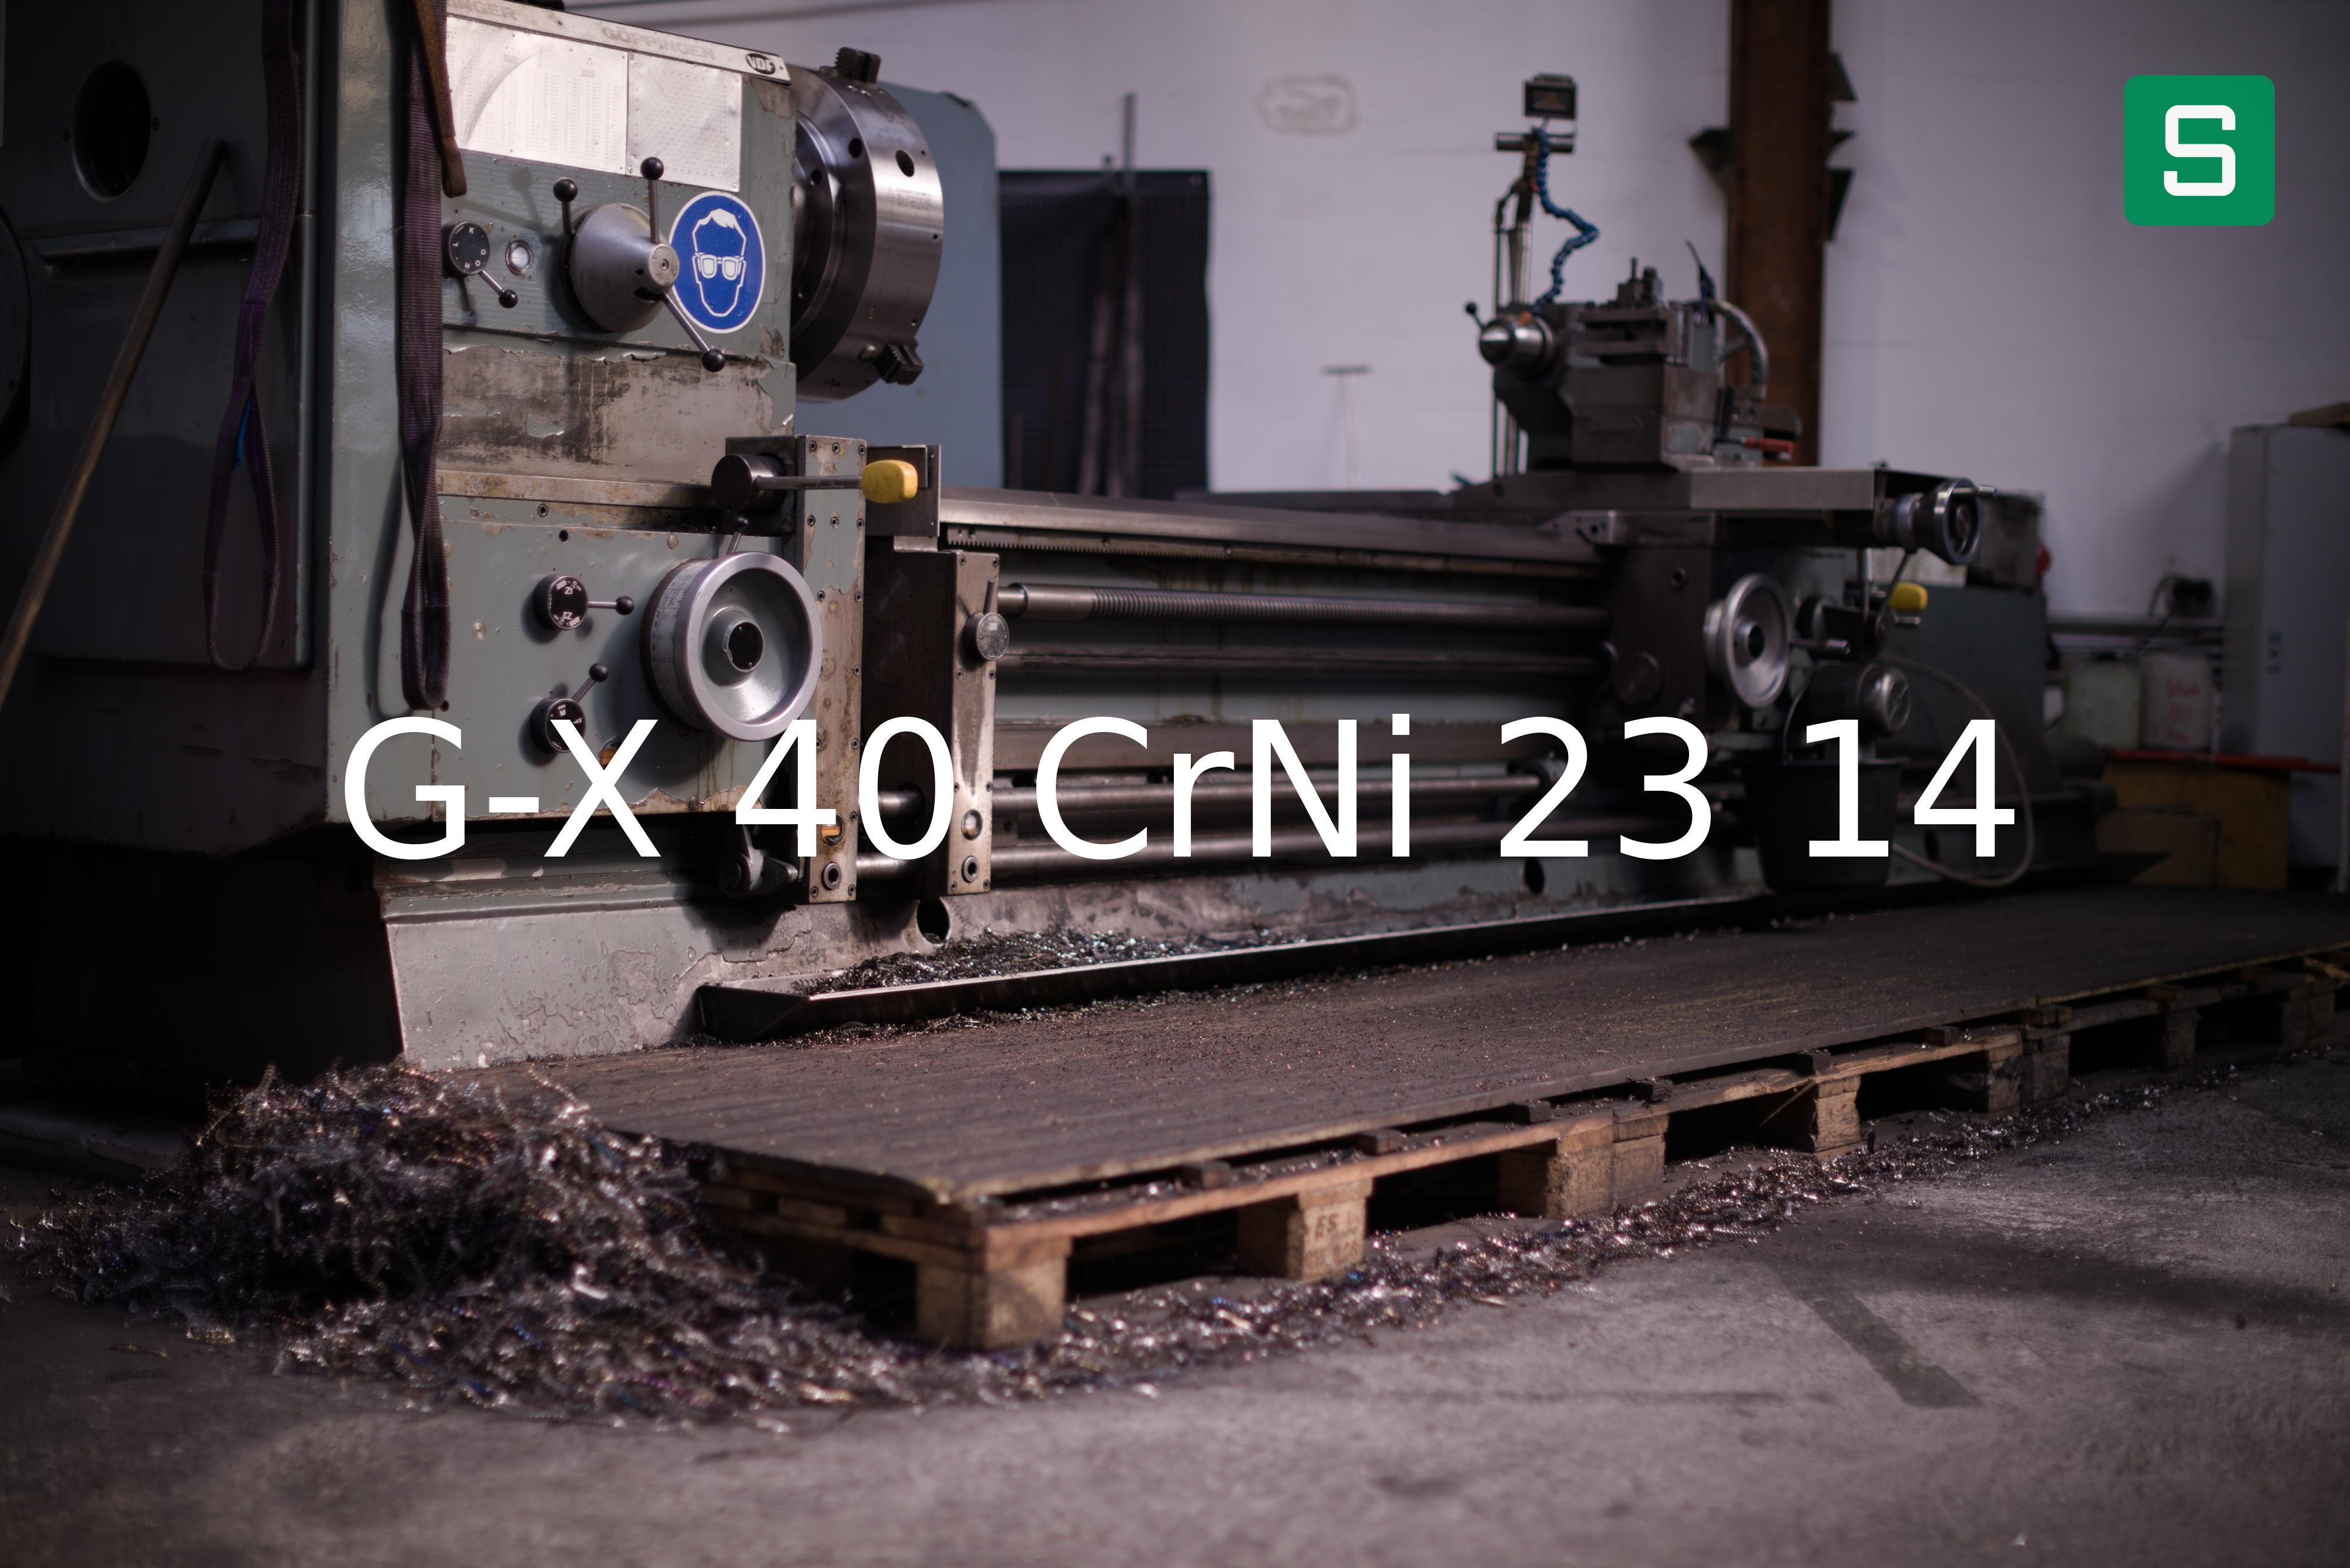 Steel Material: G-X 40 CrNi 23 14